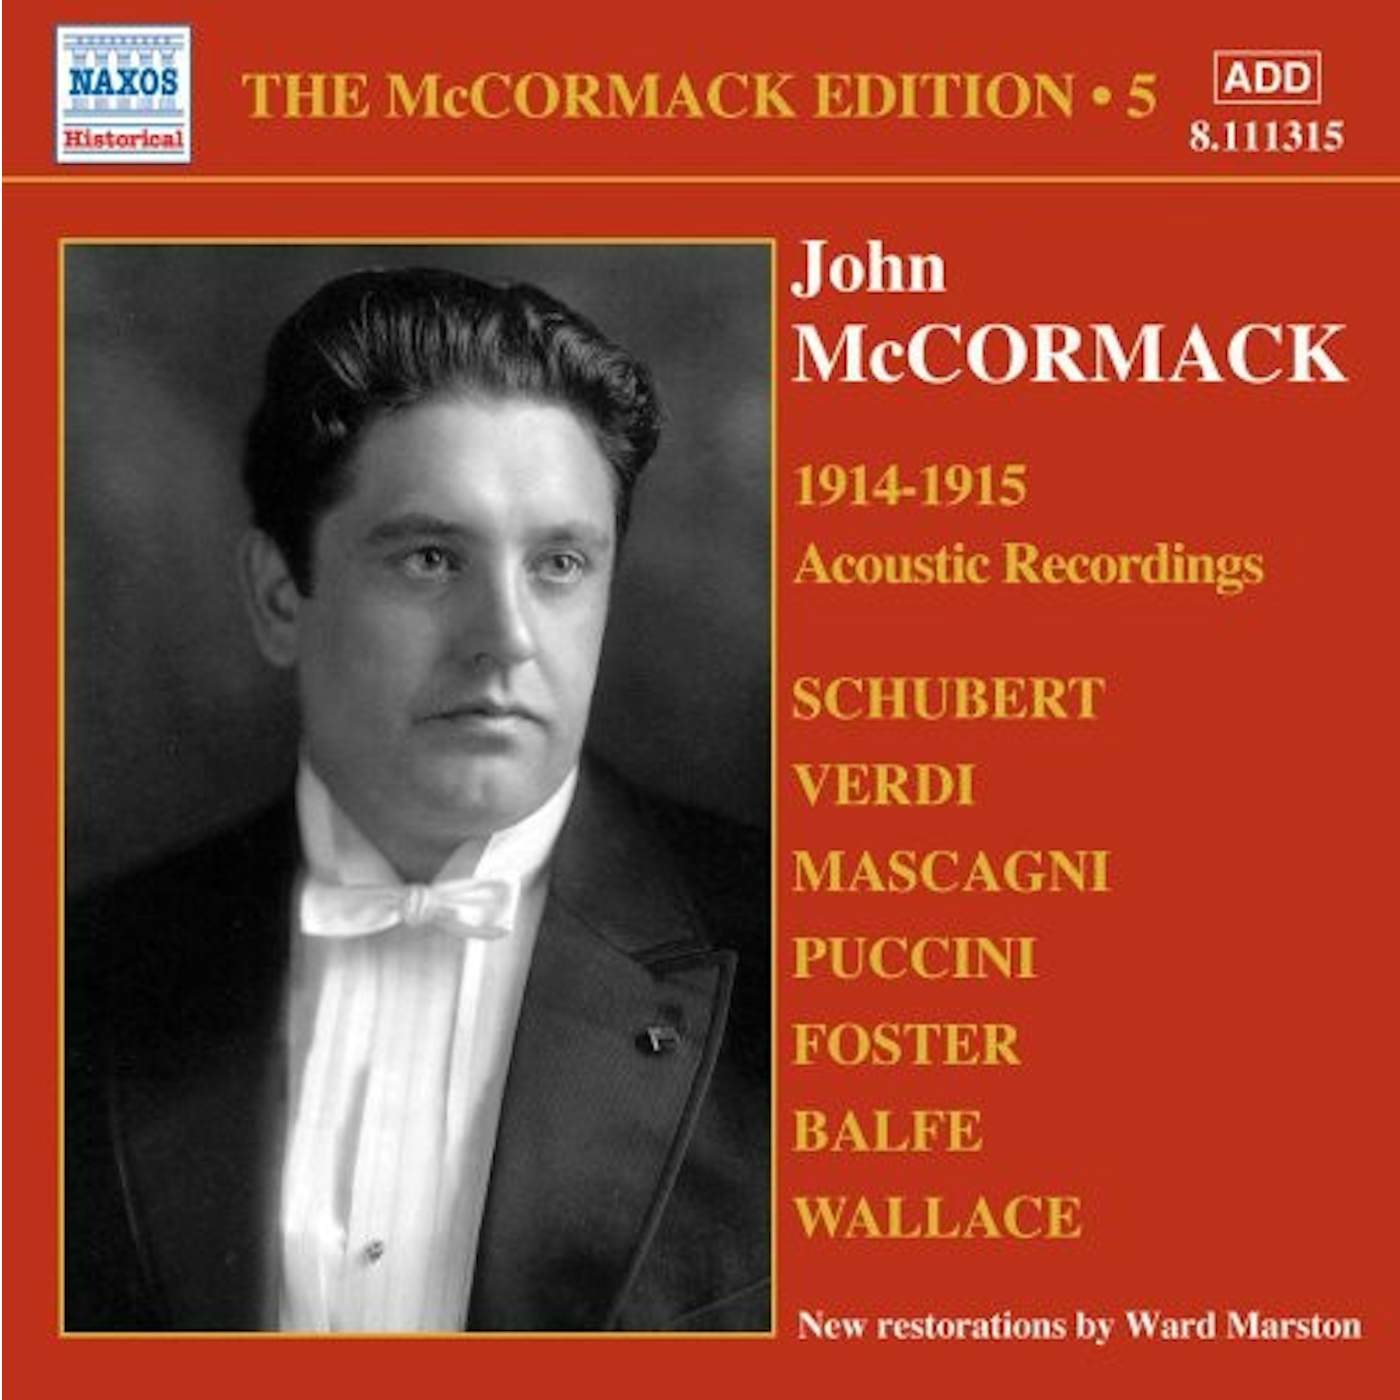 JOHN MCCORMACK EDITION VOL. 5: CD